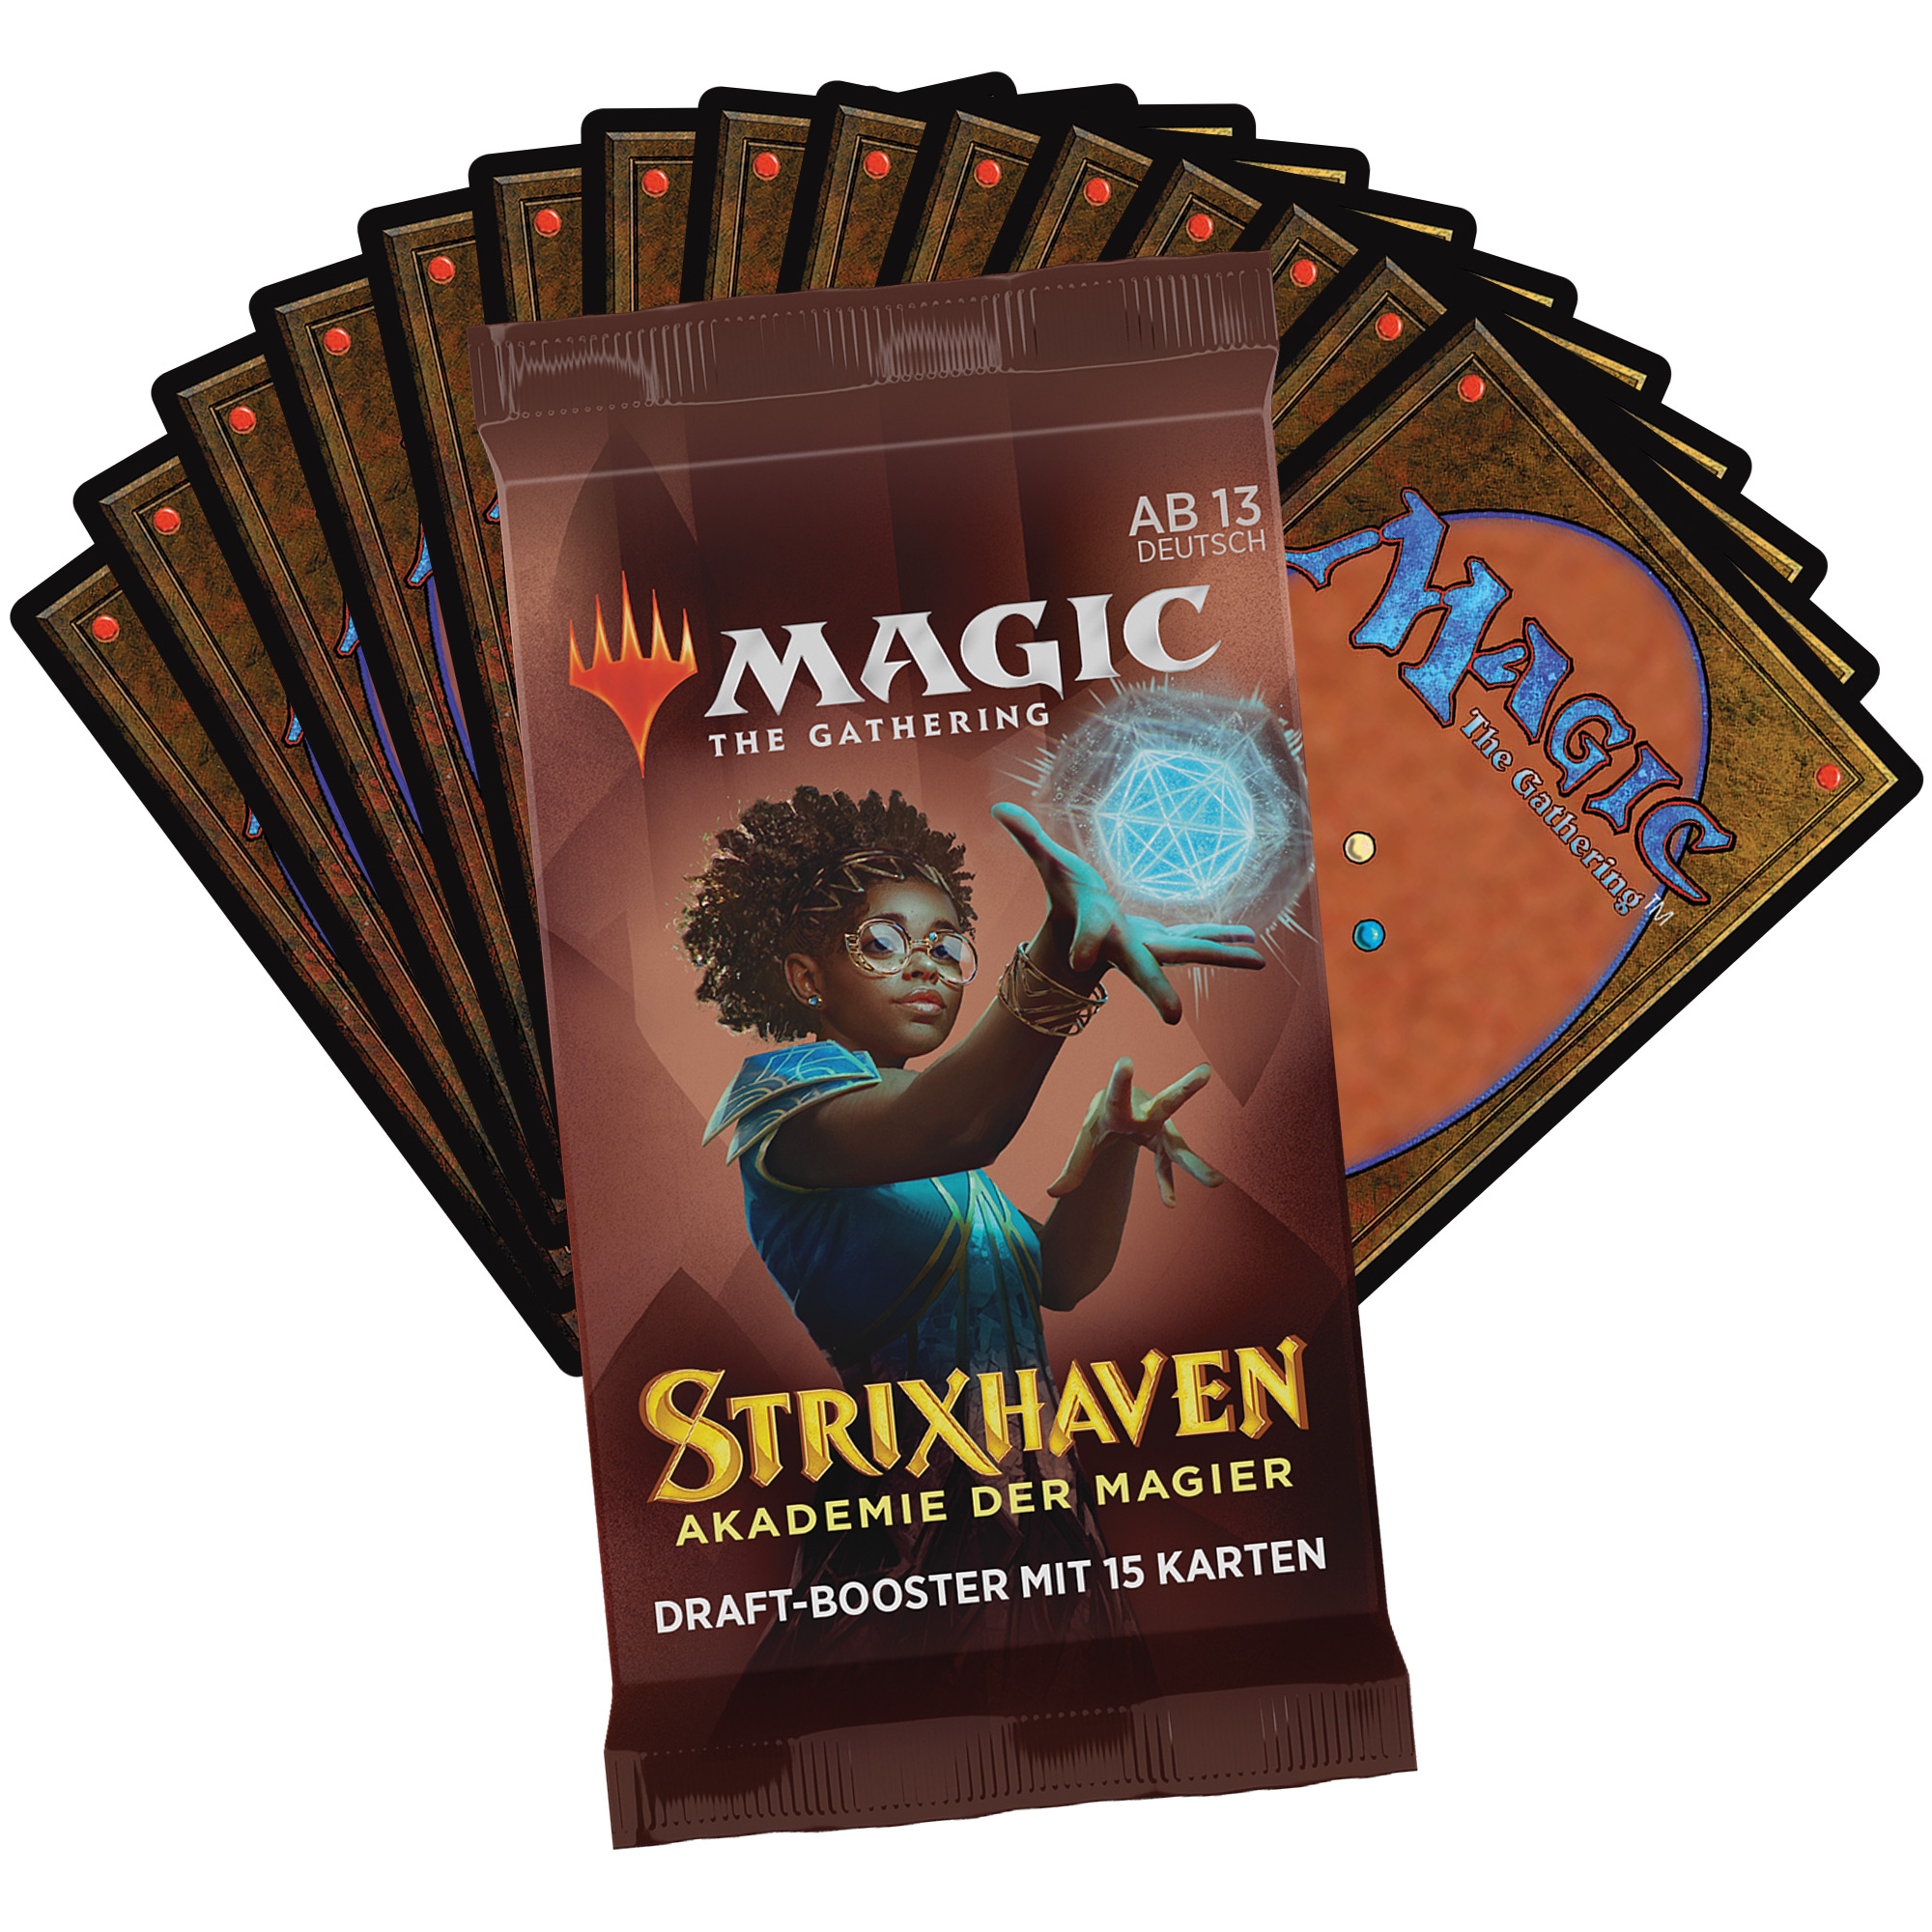 Magic: The Gathering Strixhaven Draft-Booster Display ...